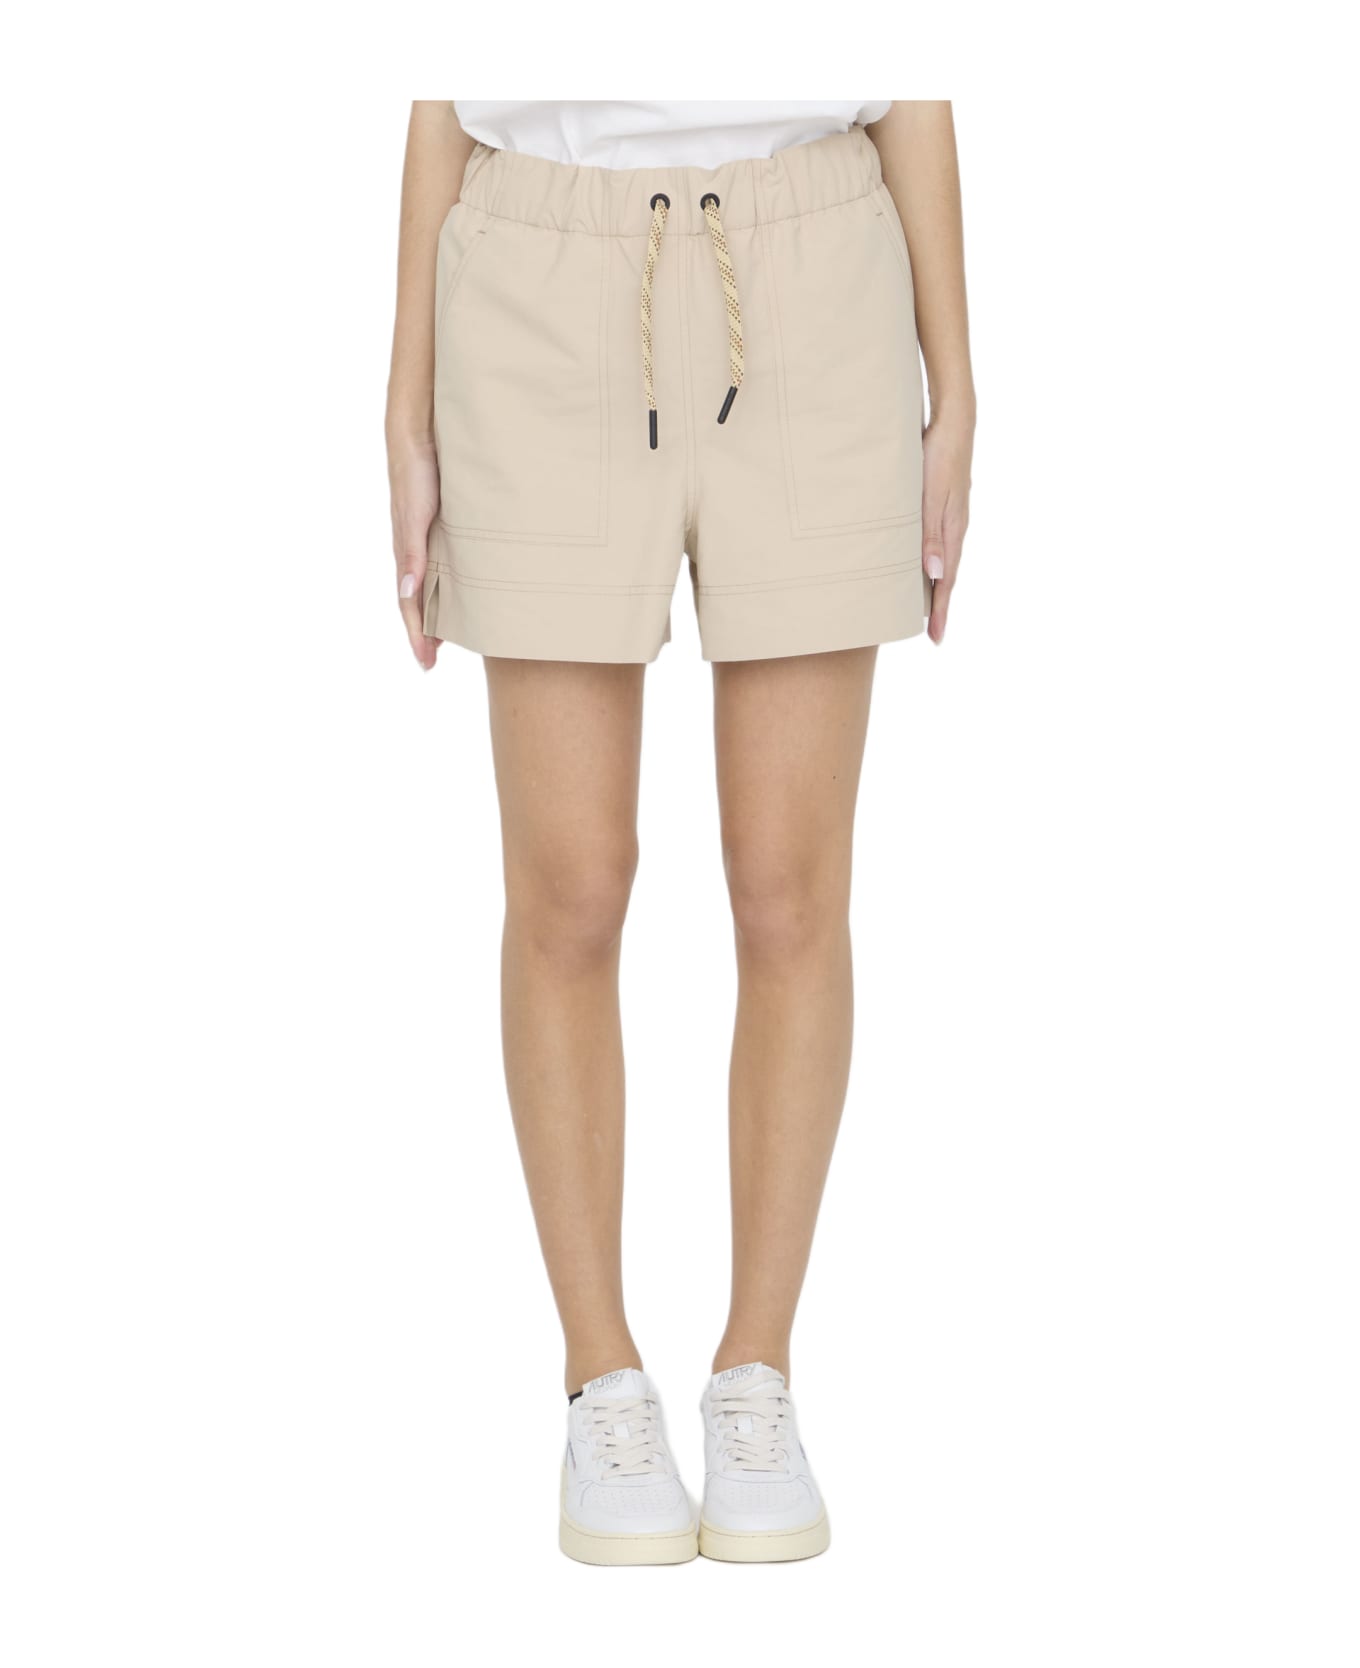 Moncler Grenoble Nylon Shorts - Medium beige